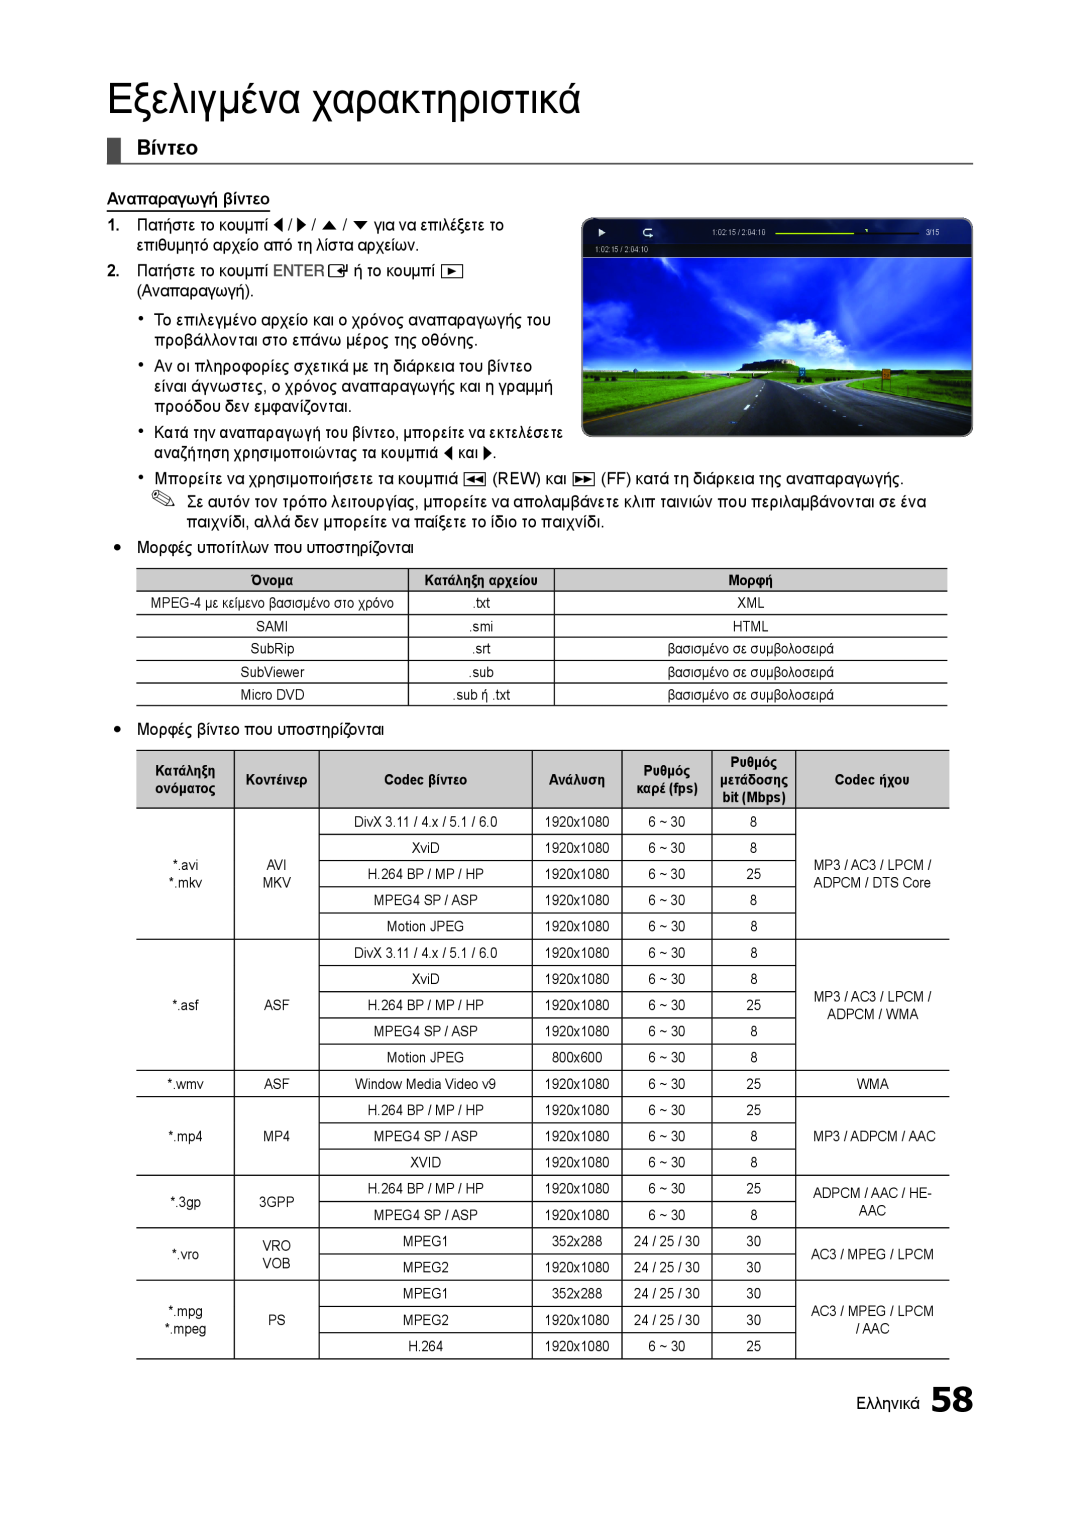 Samsung LT27A950EX/EN, LT27A750EX/EN, LT23A750EX/EN, LT27B750EW/EN Βίντεο, Εξελιγμένα χαρακτηριστικά, Αναπαραγωγή βίντεο 